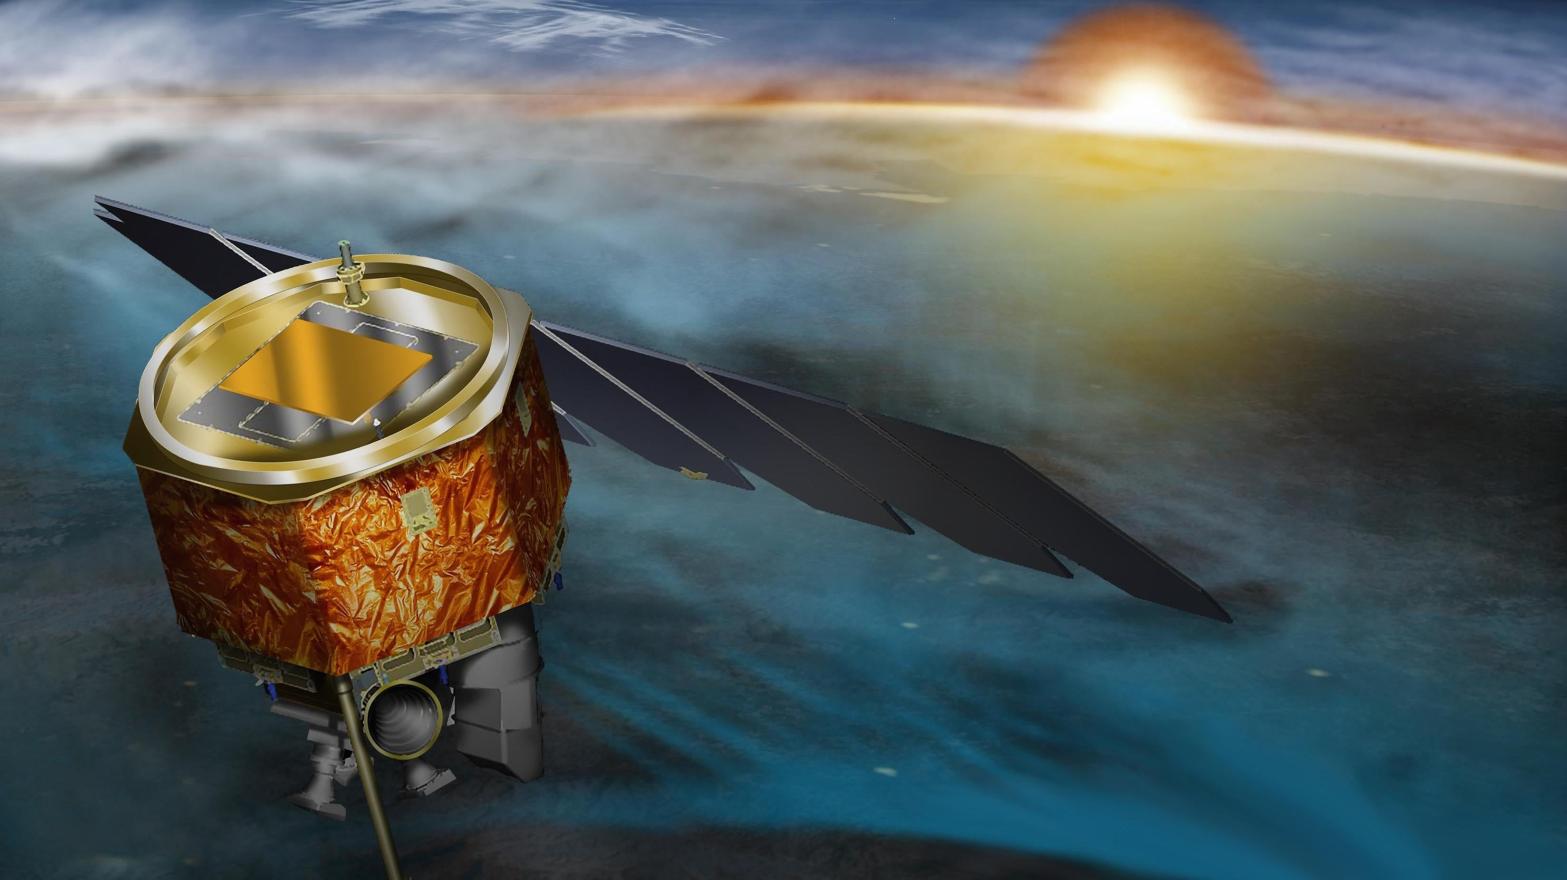 Artist's concept of the AIM spacecraft in orbit around Earth. (Illustration: NASA)